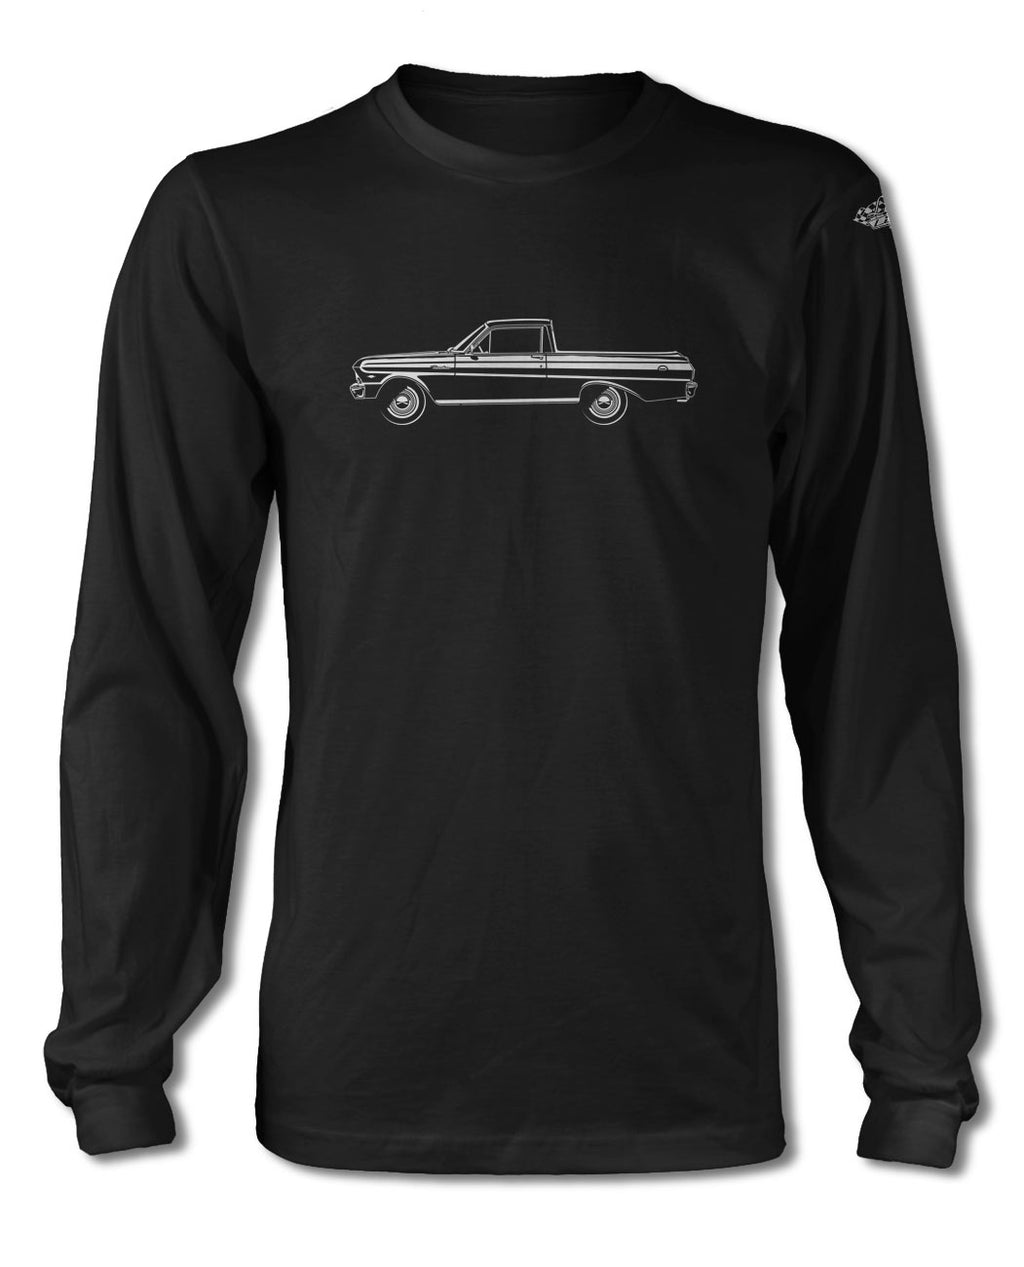 1965 Ford Ranchero T-Shirt - Long Sleeves - Side View